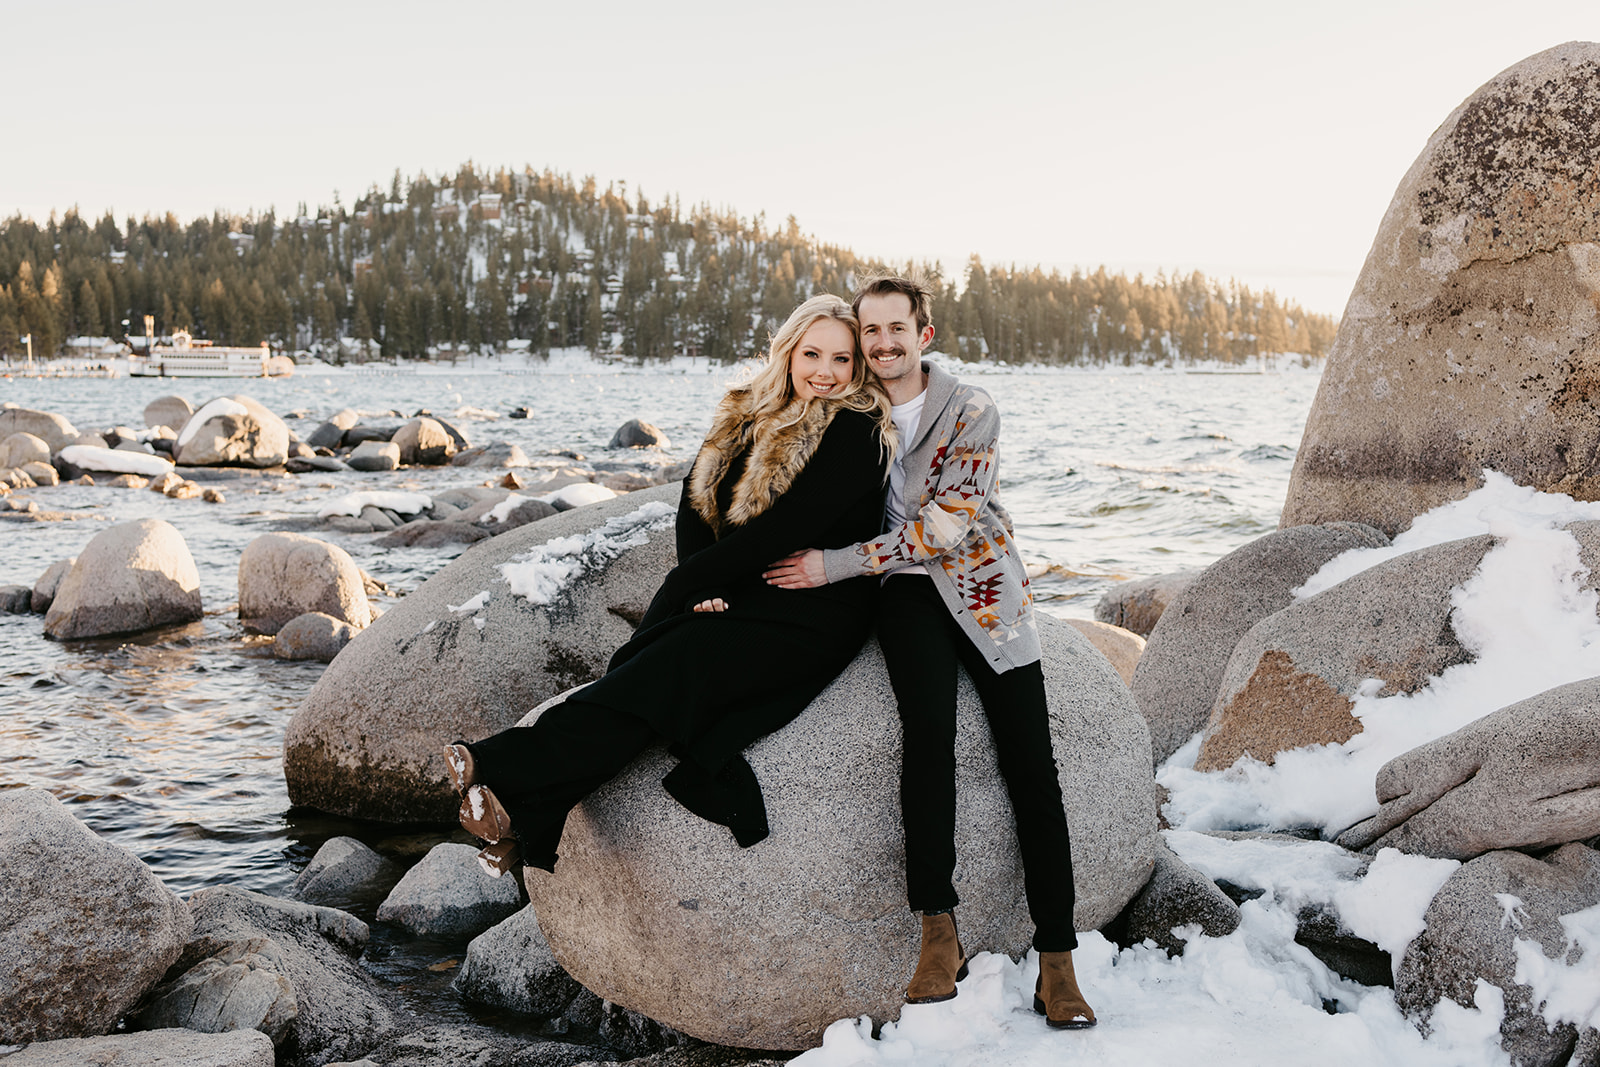 South Lake Tahoe Winter Engagement Session photographed by Dani Rawson Photo, a Lake Tahoe-based wedding photographer.